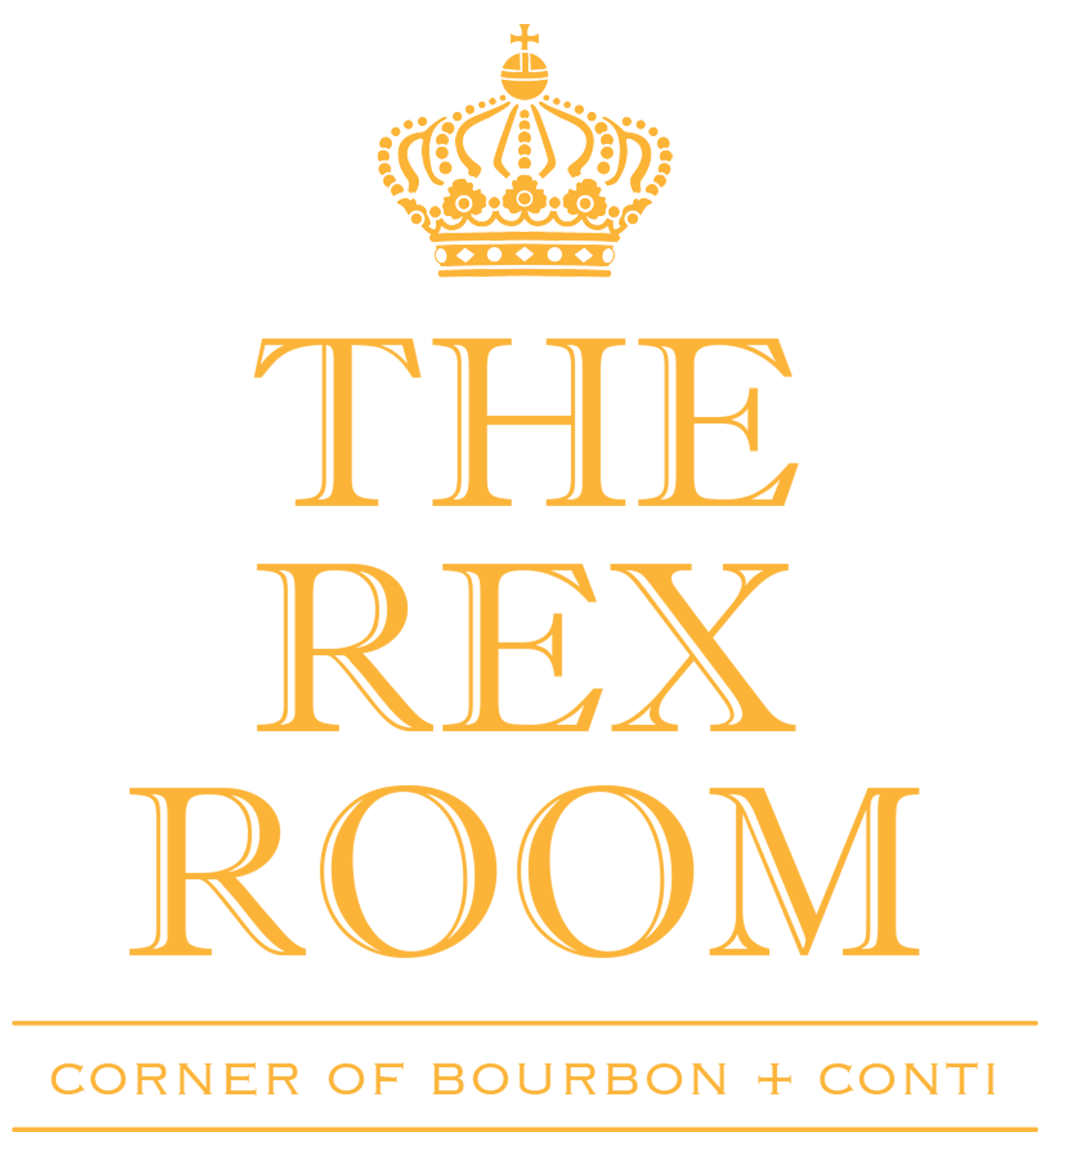 The Rex Room